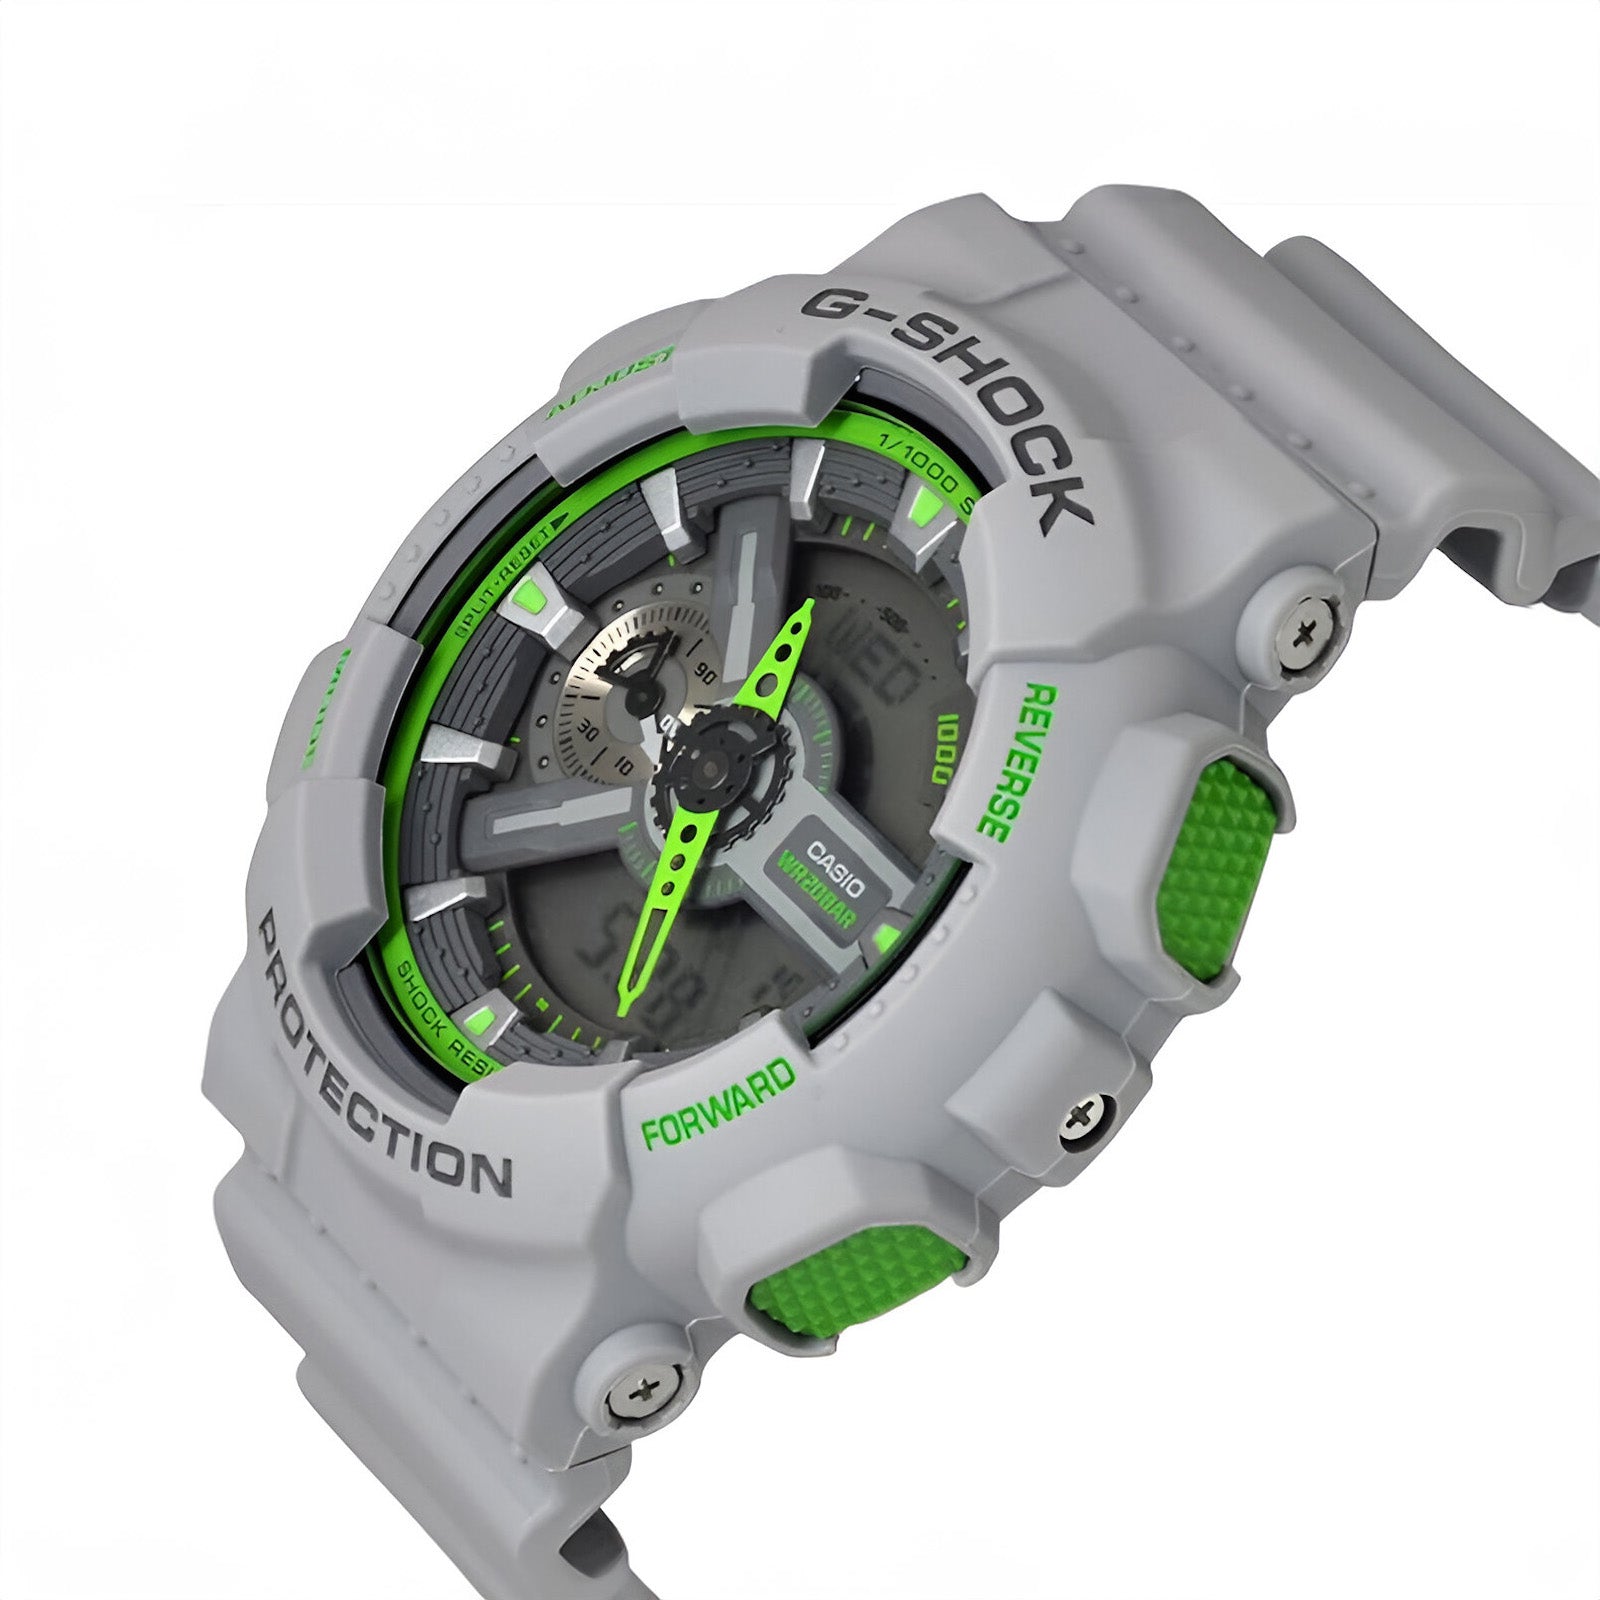 CASIO Casio G-Shock White Analog-Digital Men's Watch GA-110TS-8A3DR